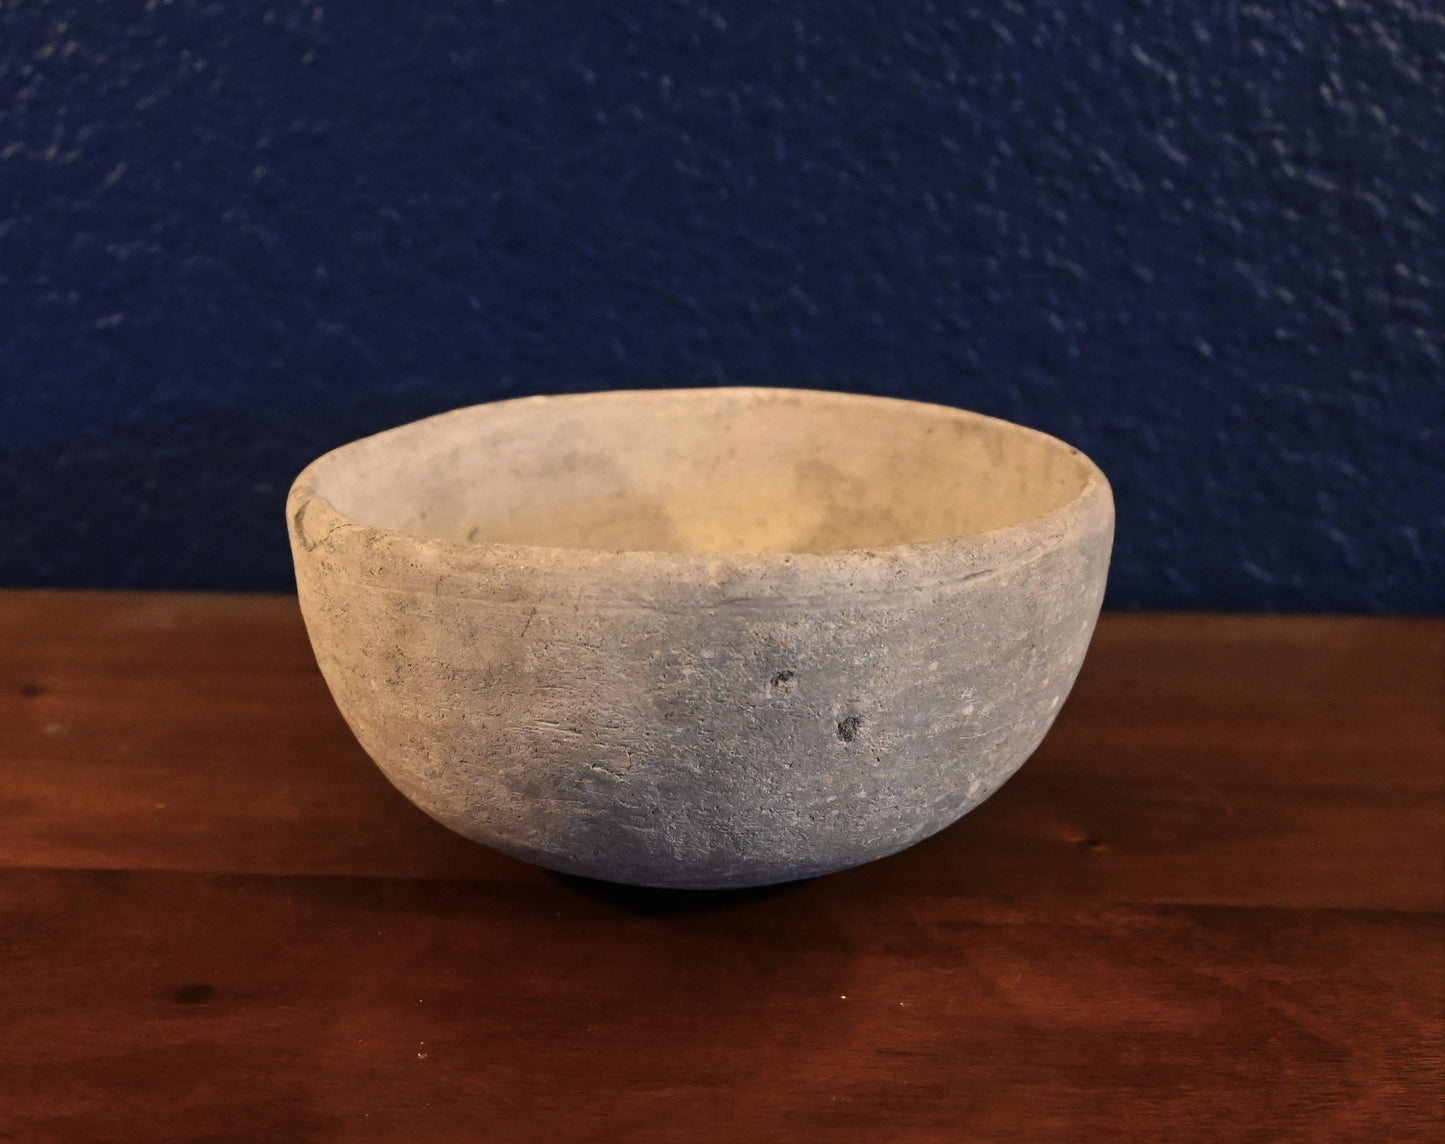 Authentic pre-Columbian Bowl Ecuador La Tolita Tumoco Pottery Bowl c. 600 BC - 200 AD Certificate of Authenticity & provenance -great gift